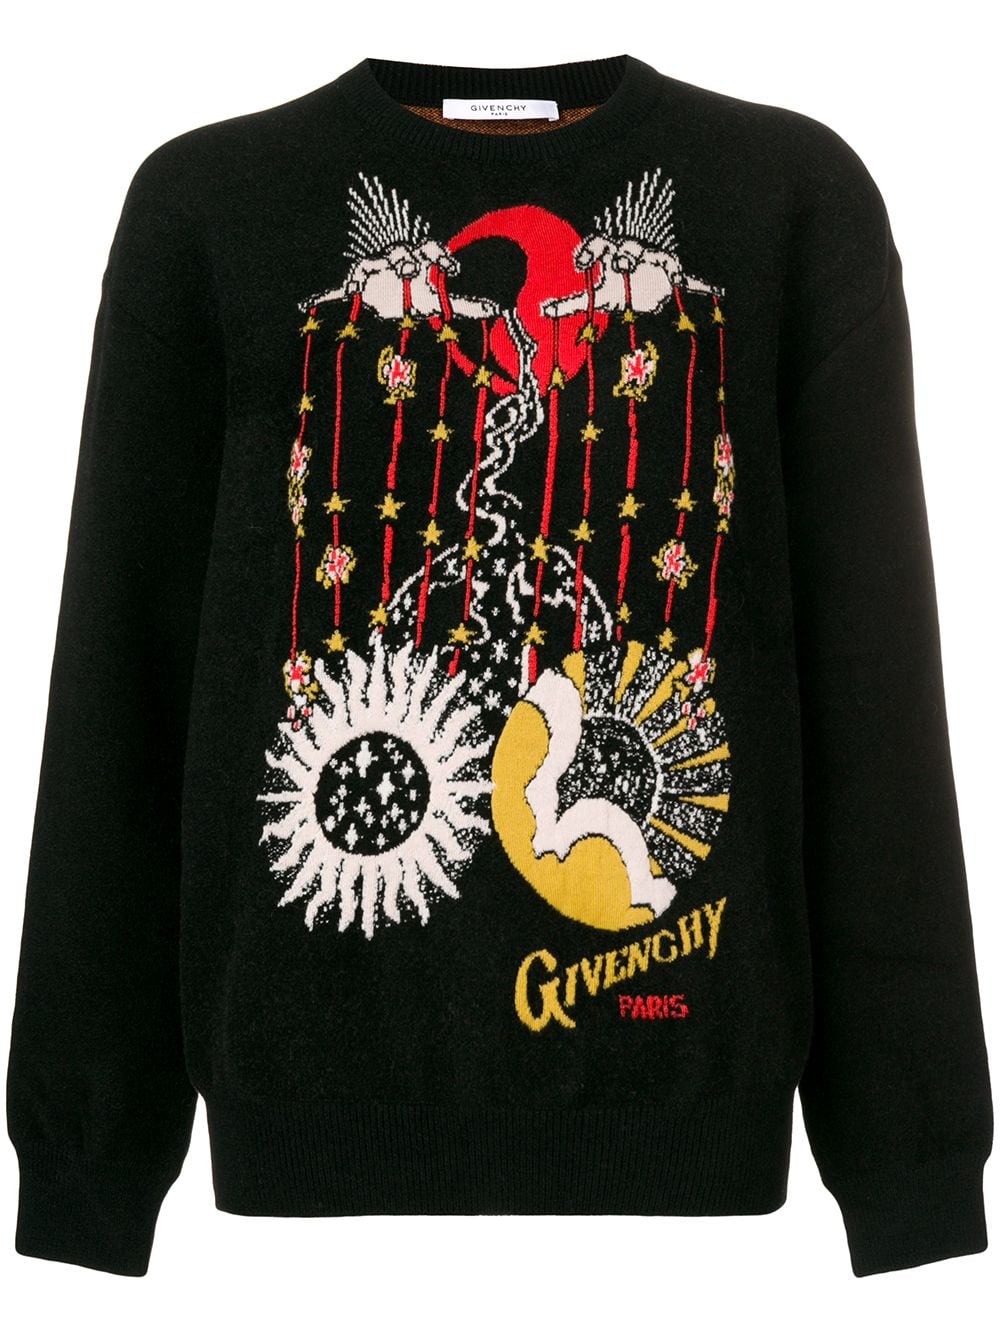 фото Givenchy свитер 'libra' вязки интарсия